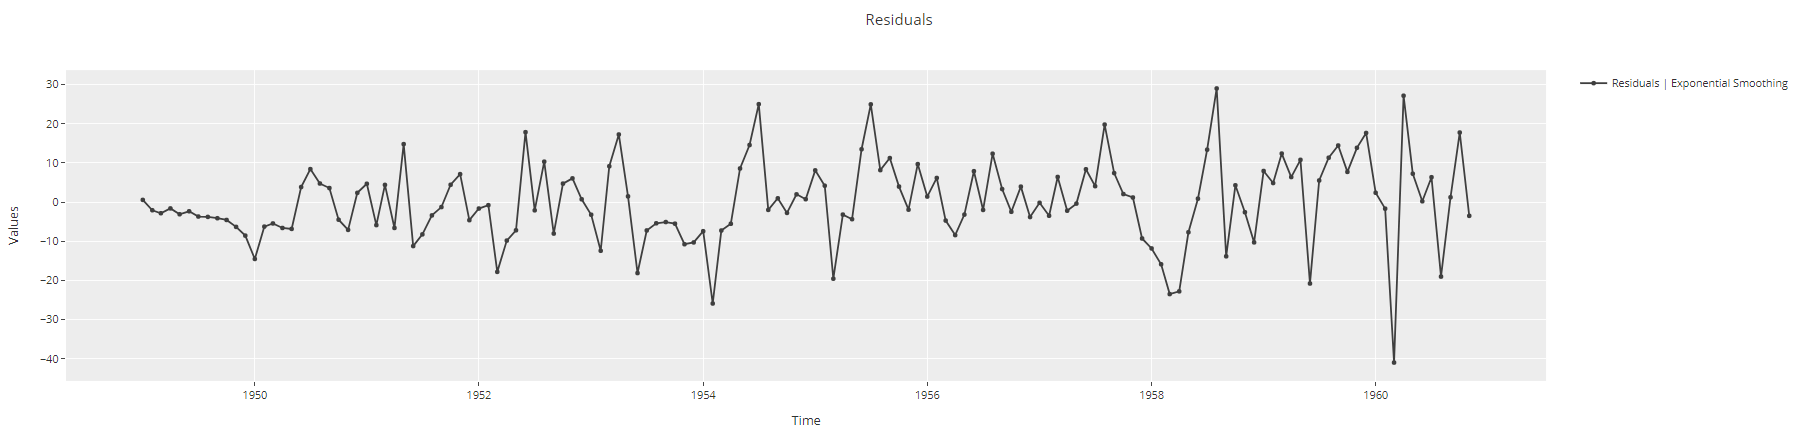 Time-Series residuals plot